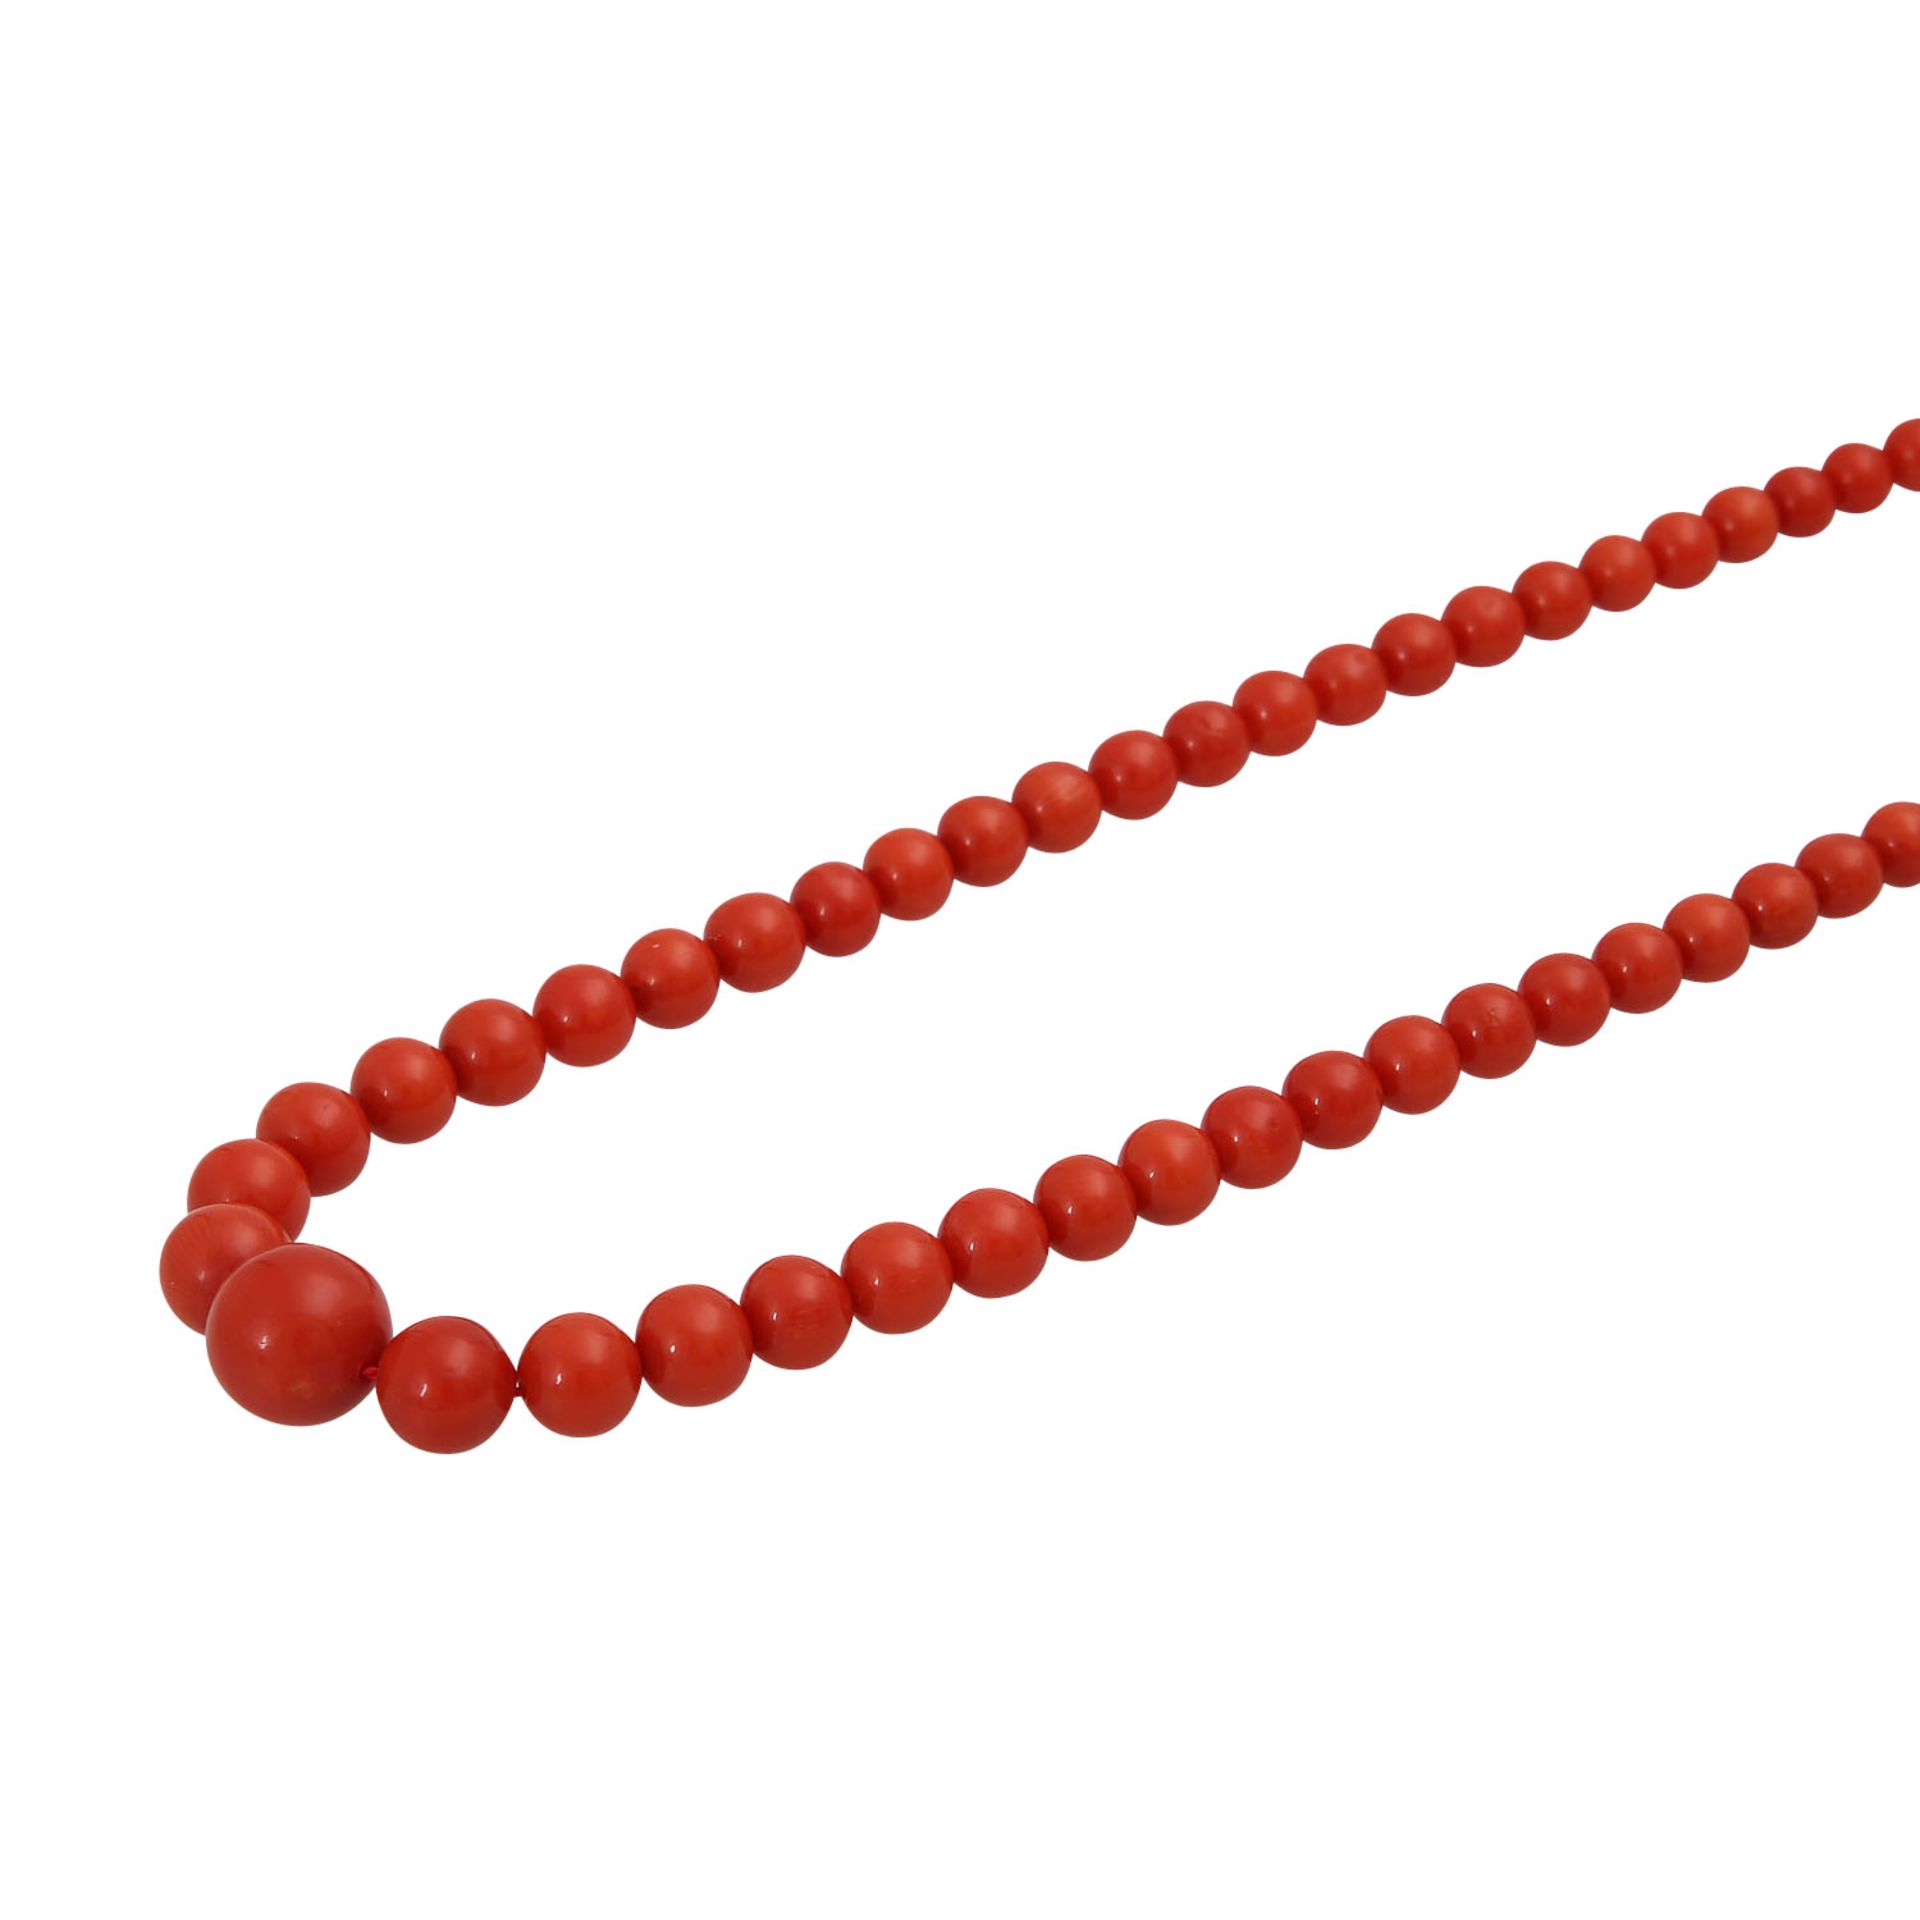 Collier aus Korallenkugelnin kräftigem Rot, im Verlauf ca. 4-10 mm, vergoldeter Federring. L: ca. 49 - Bild 4 aus 4